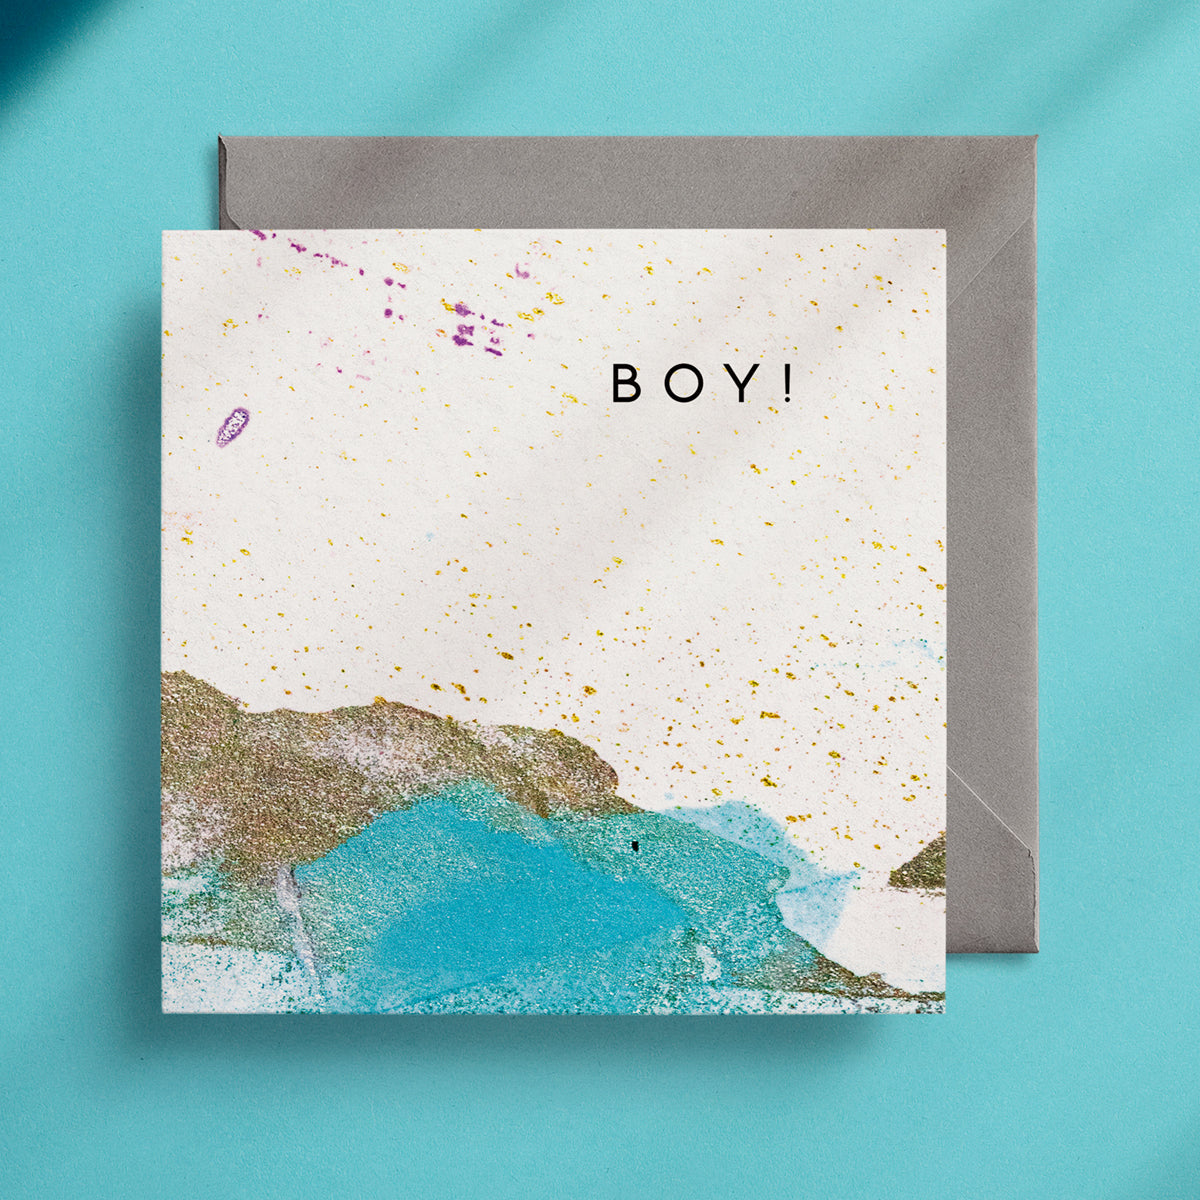 Boy! - ABSTRACT Greeting Card